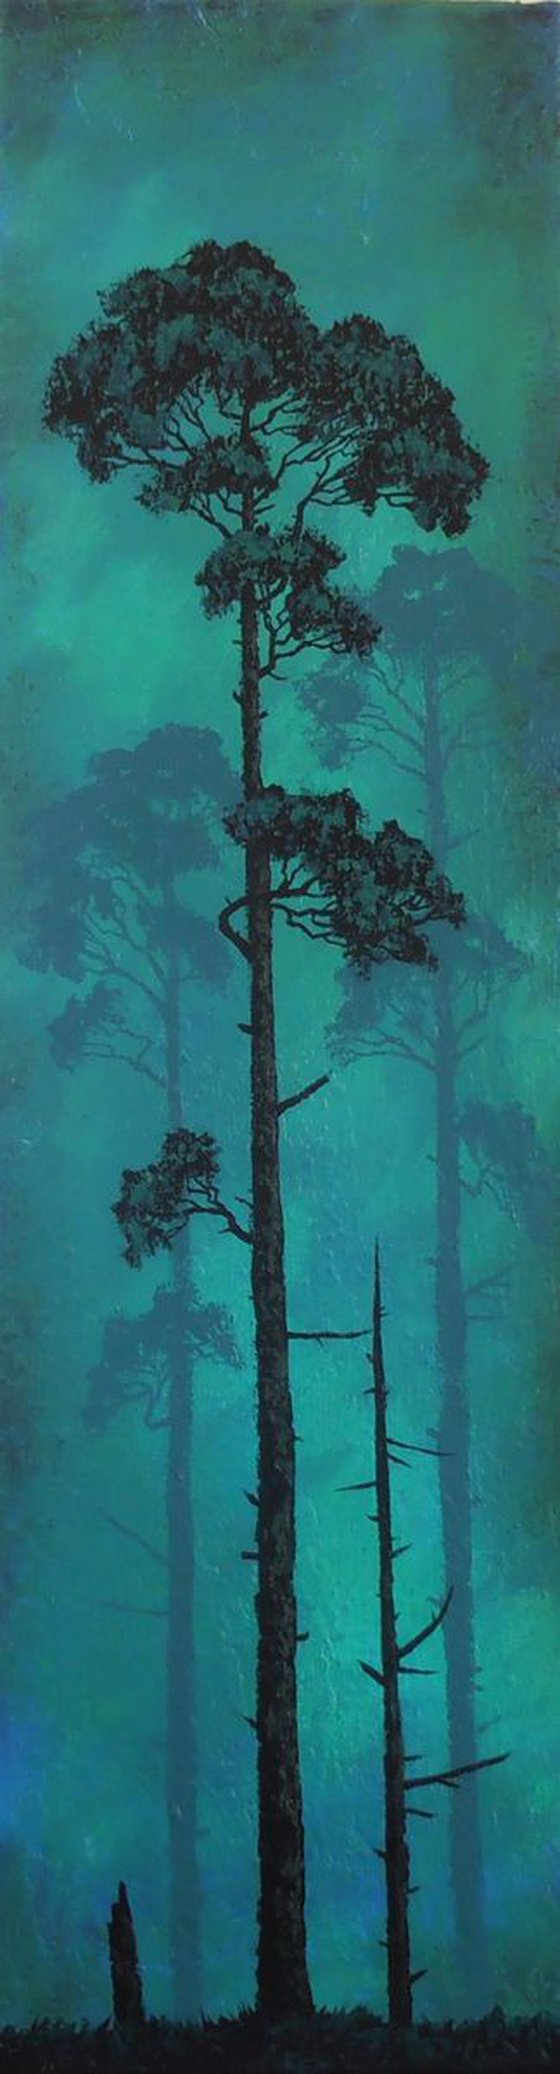 Illuminated Pine